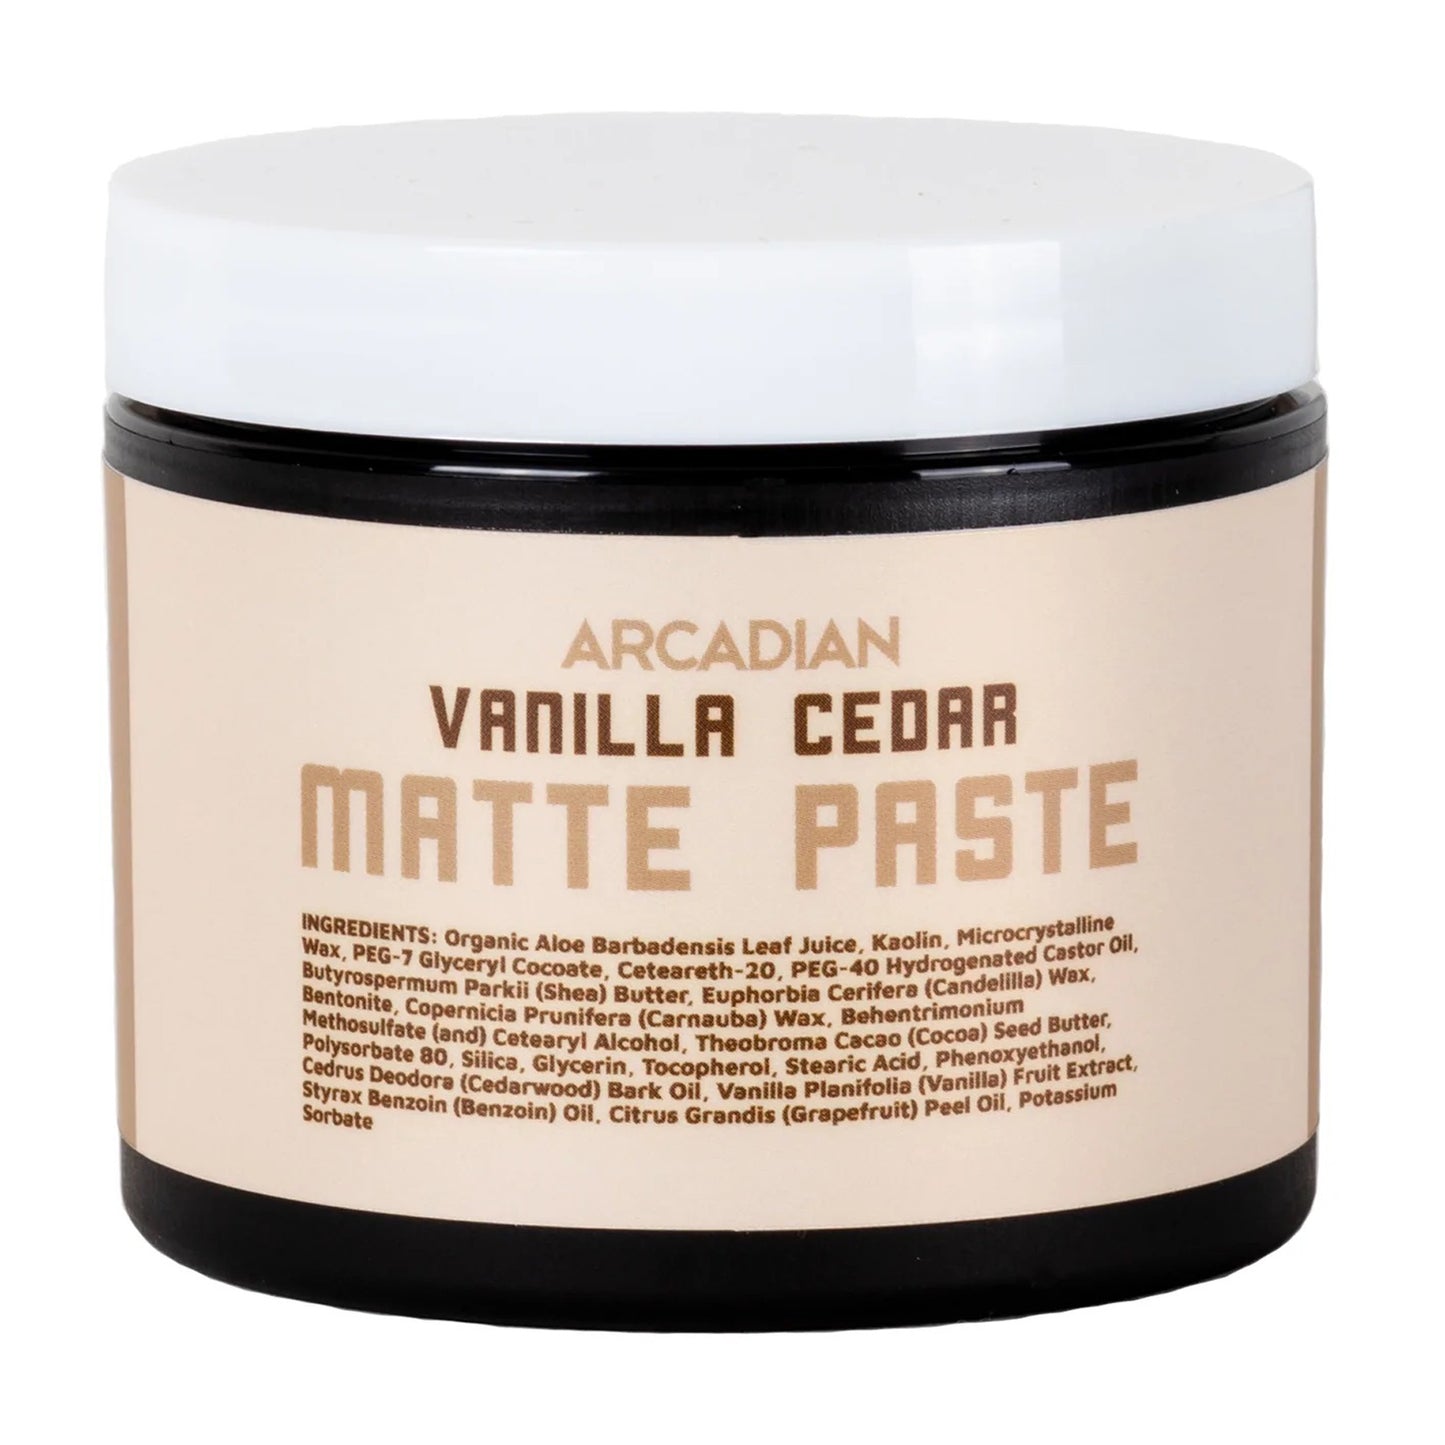 Arcadian Matte Paste - Vanilla Cedar